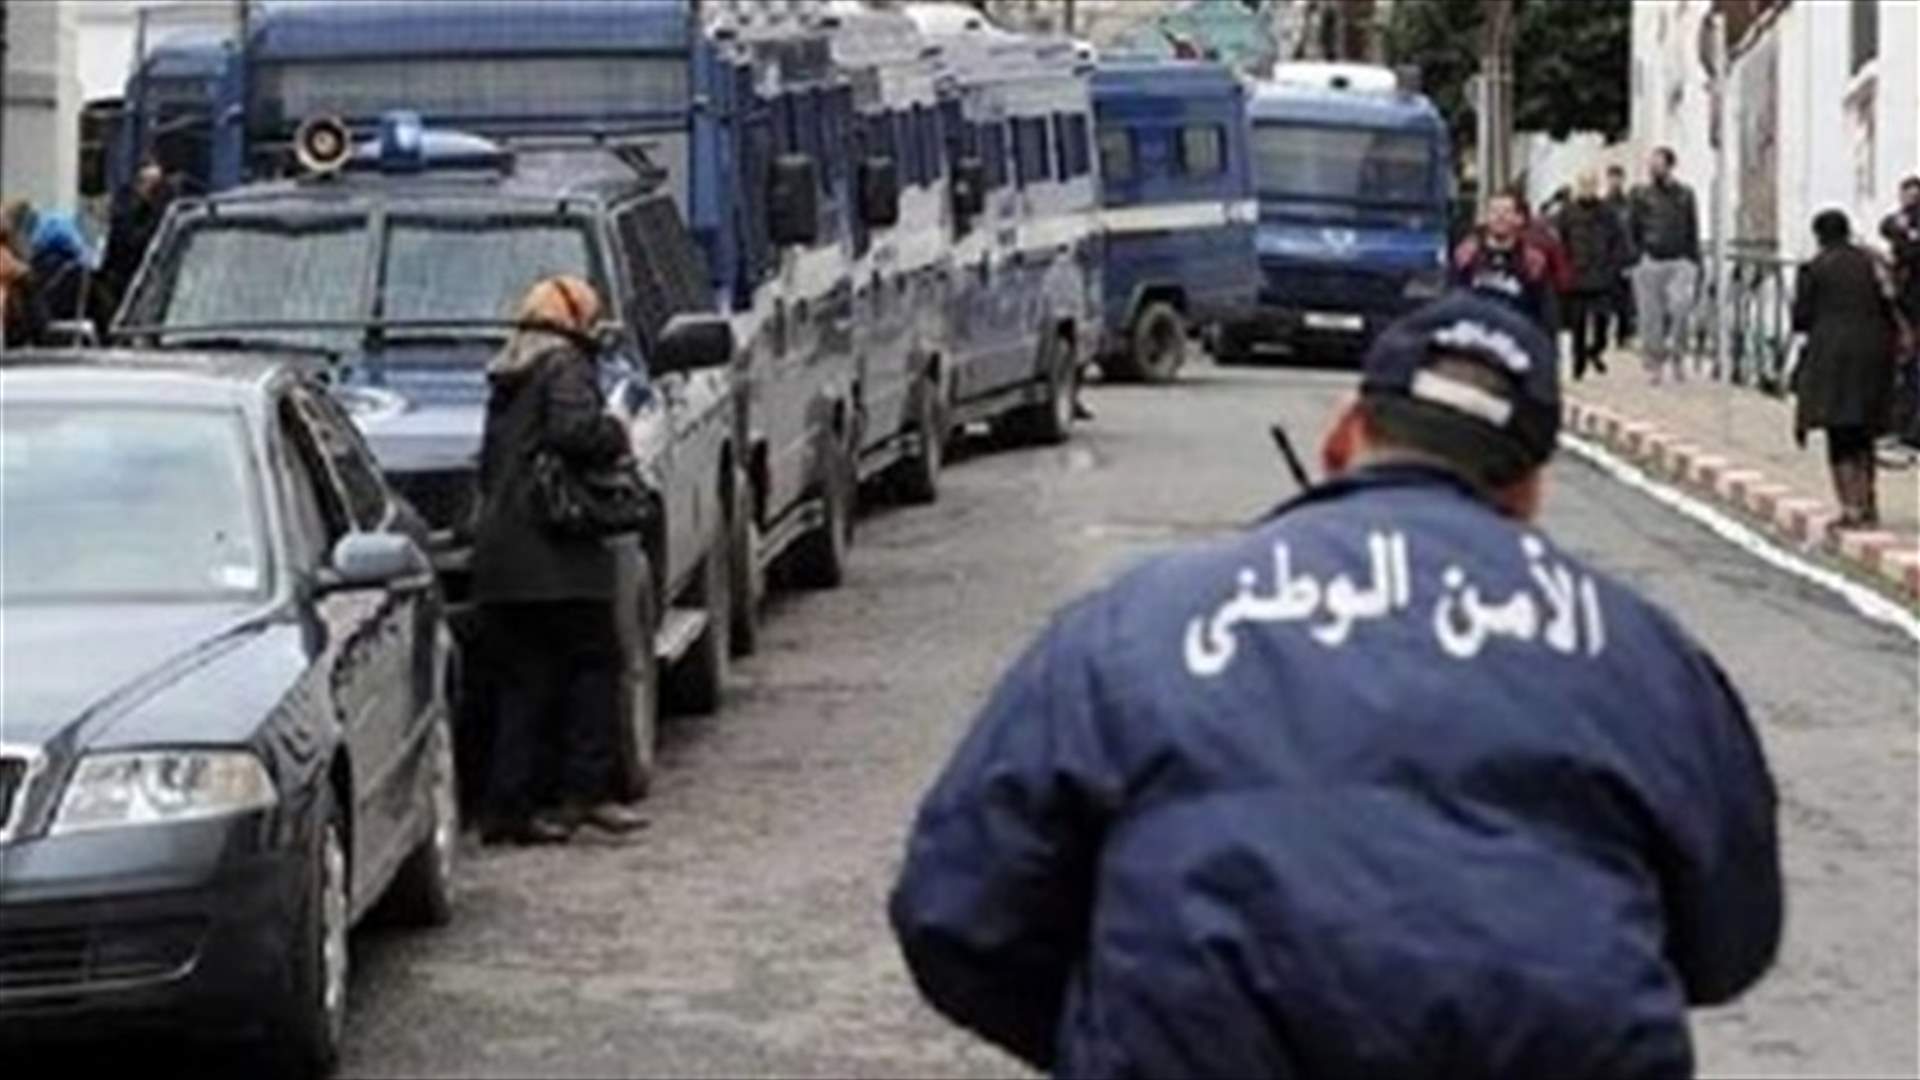 Bomber targets police office in eastern Algerian city - state media